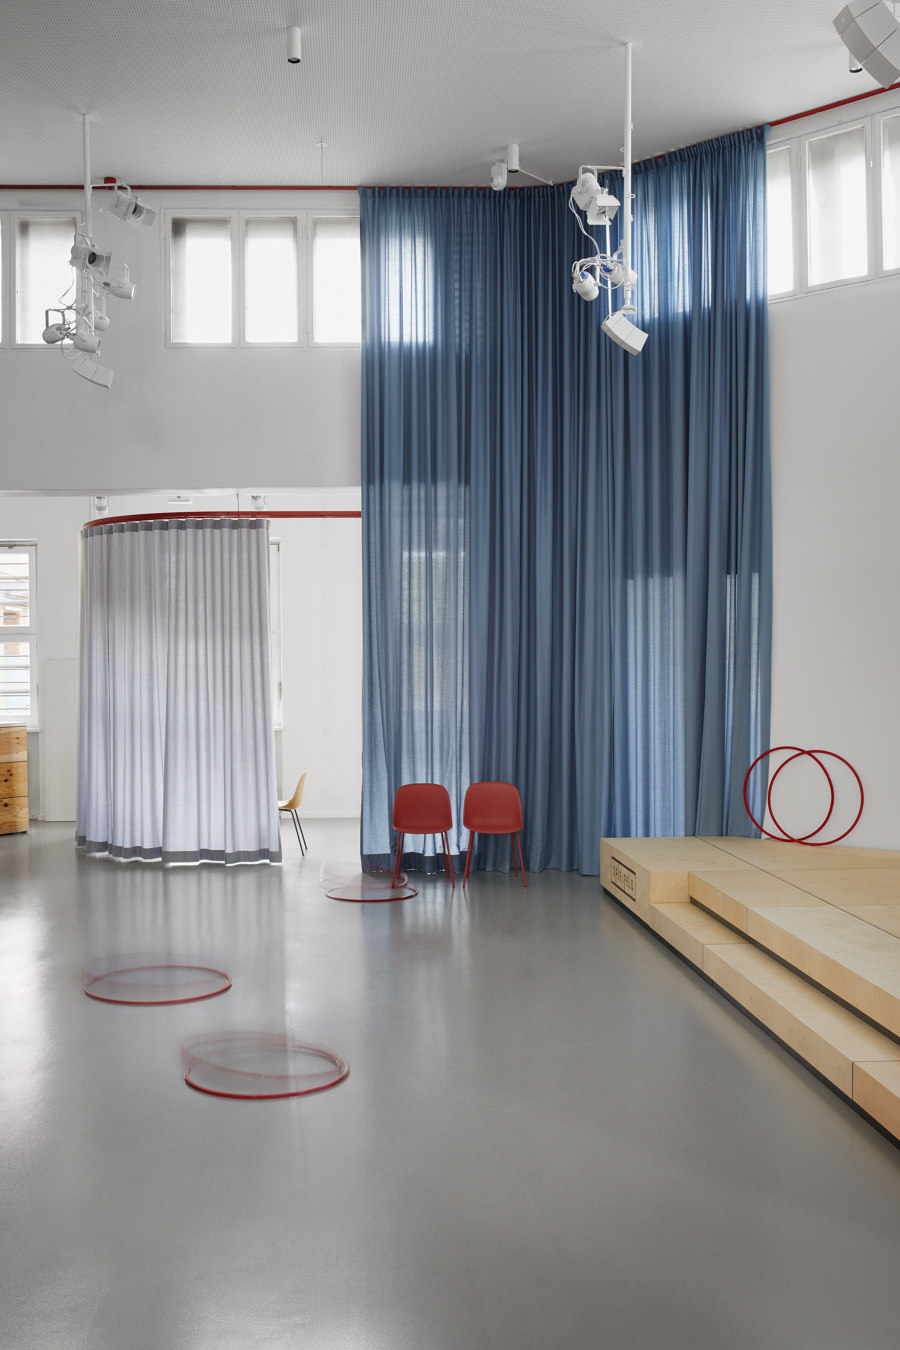 SPIELFELD Digital Hub by LXSY Architekten | Office facilities